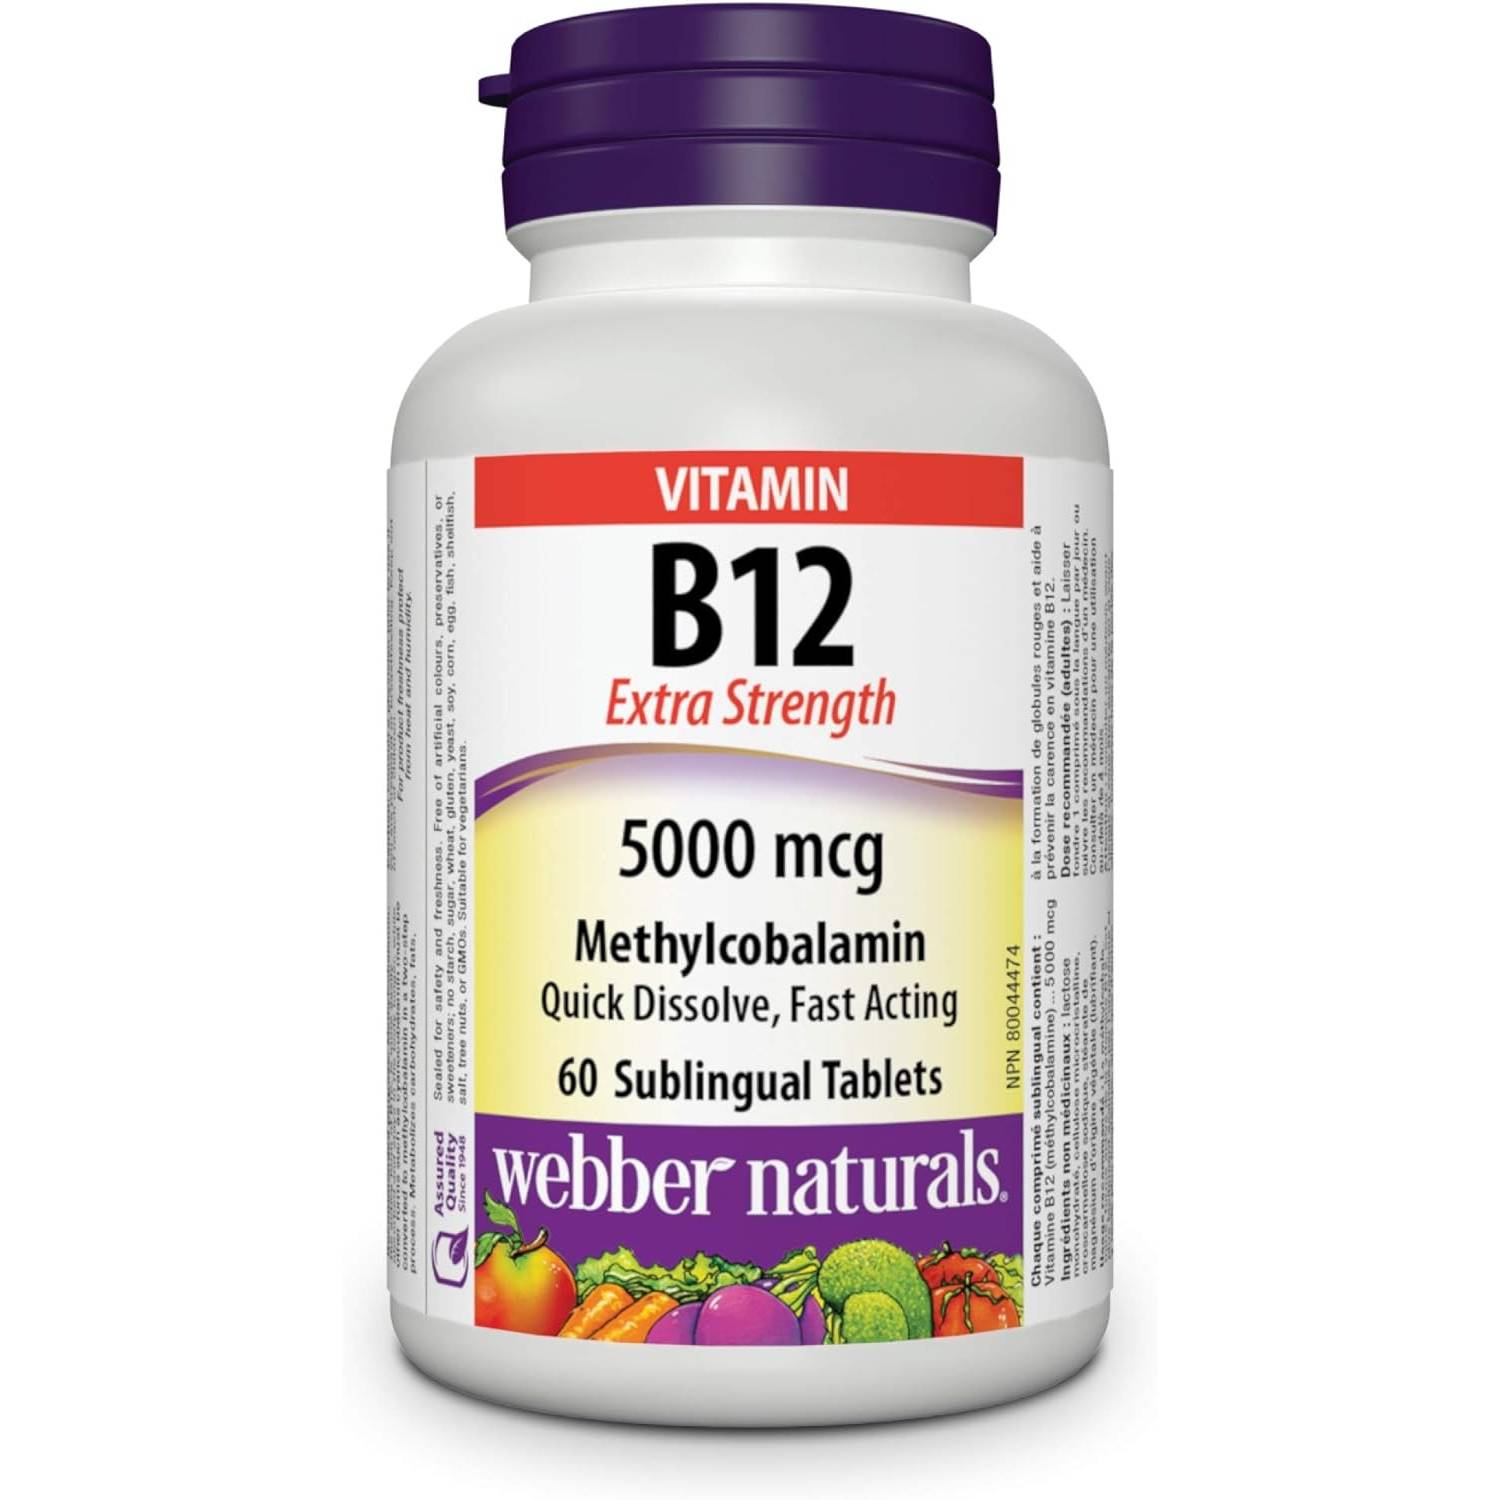 Webber Naturals Vitamin B12 Extra Strength 5000 mcg 60 Sublingual Tablets